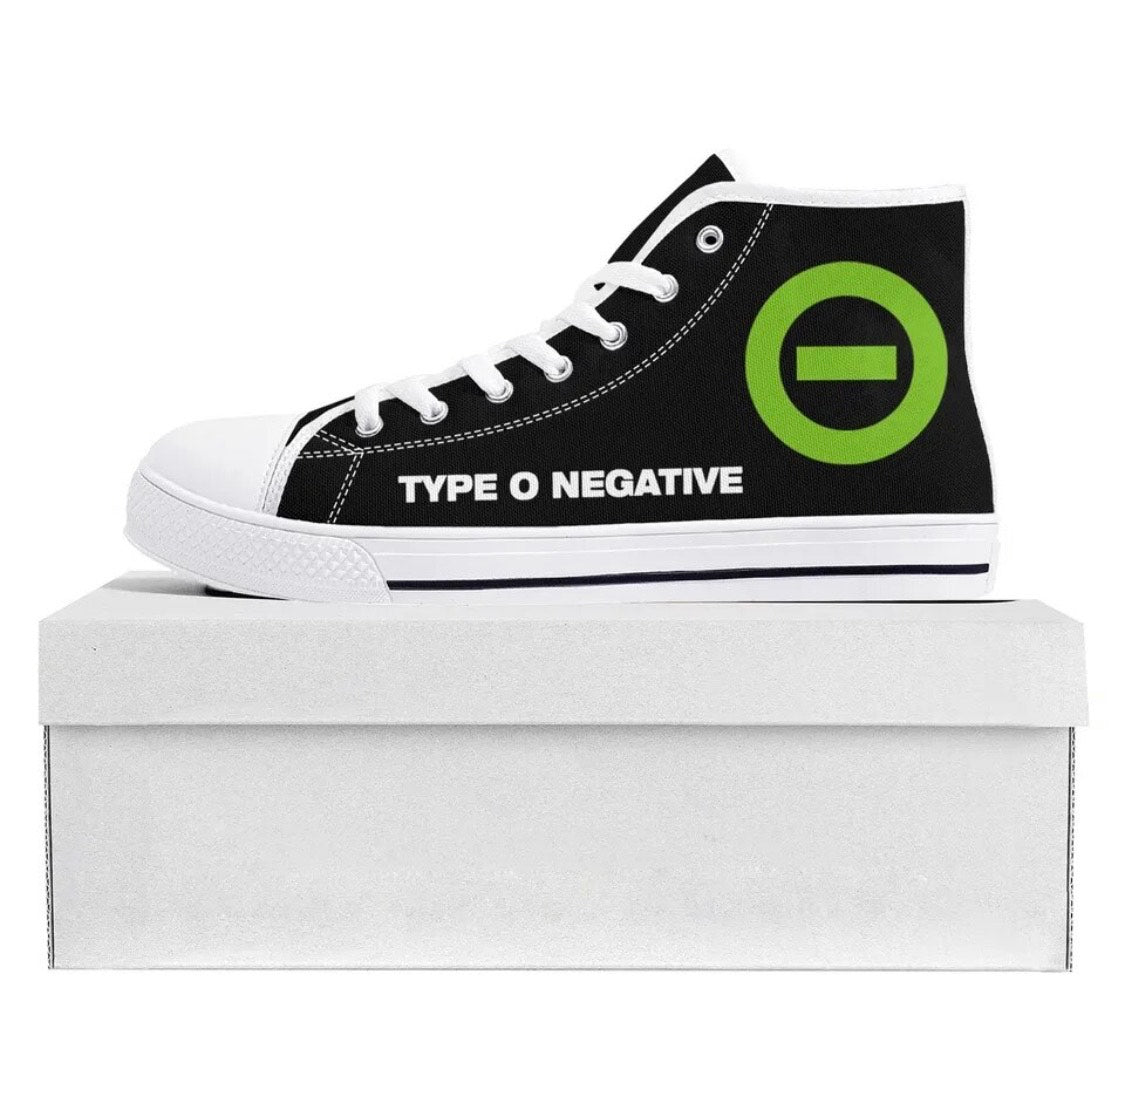 Type O Negative shoes